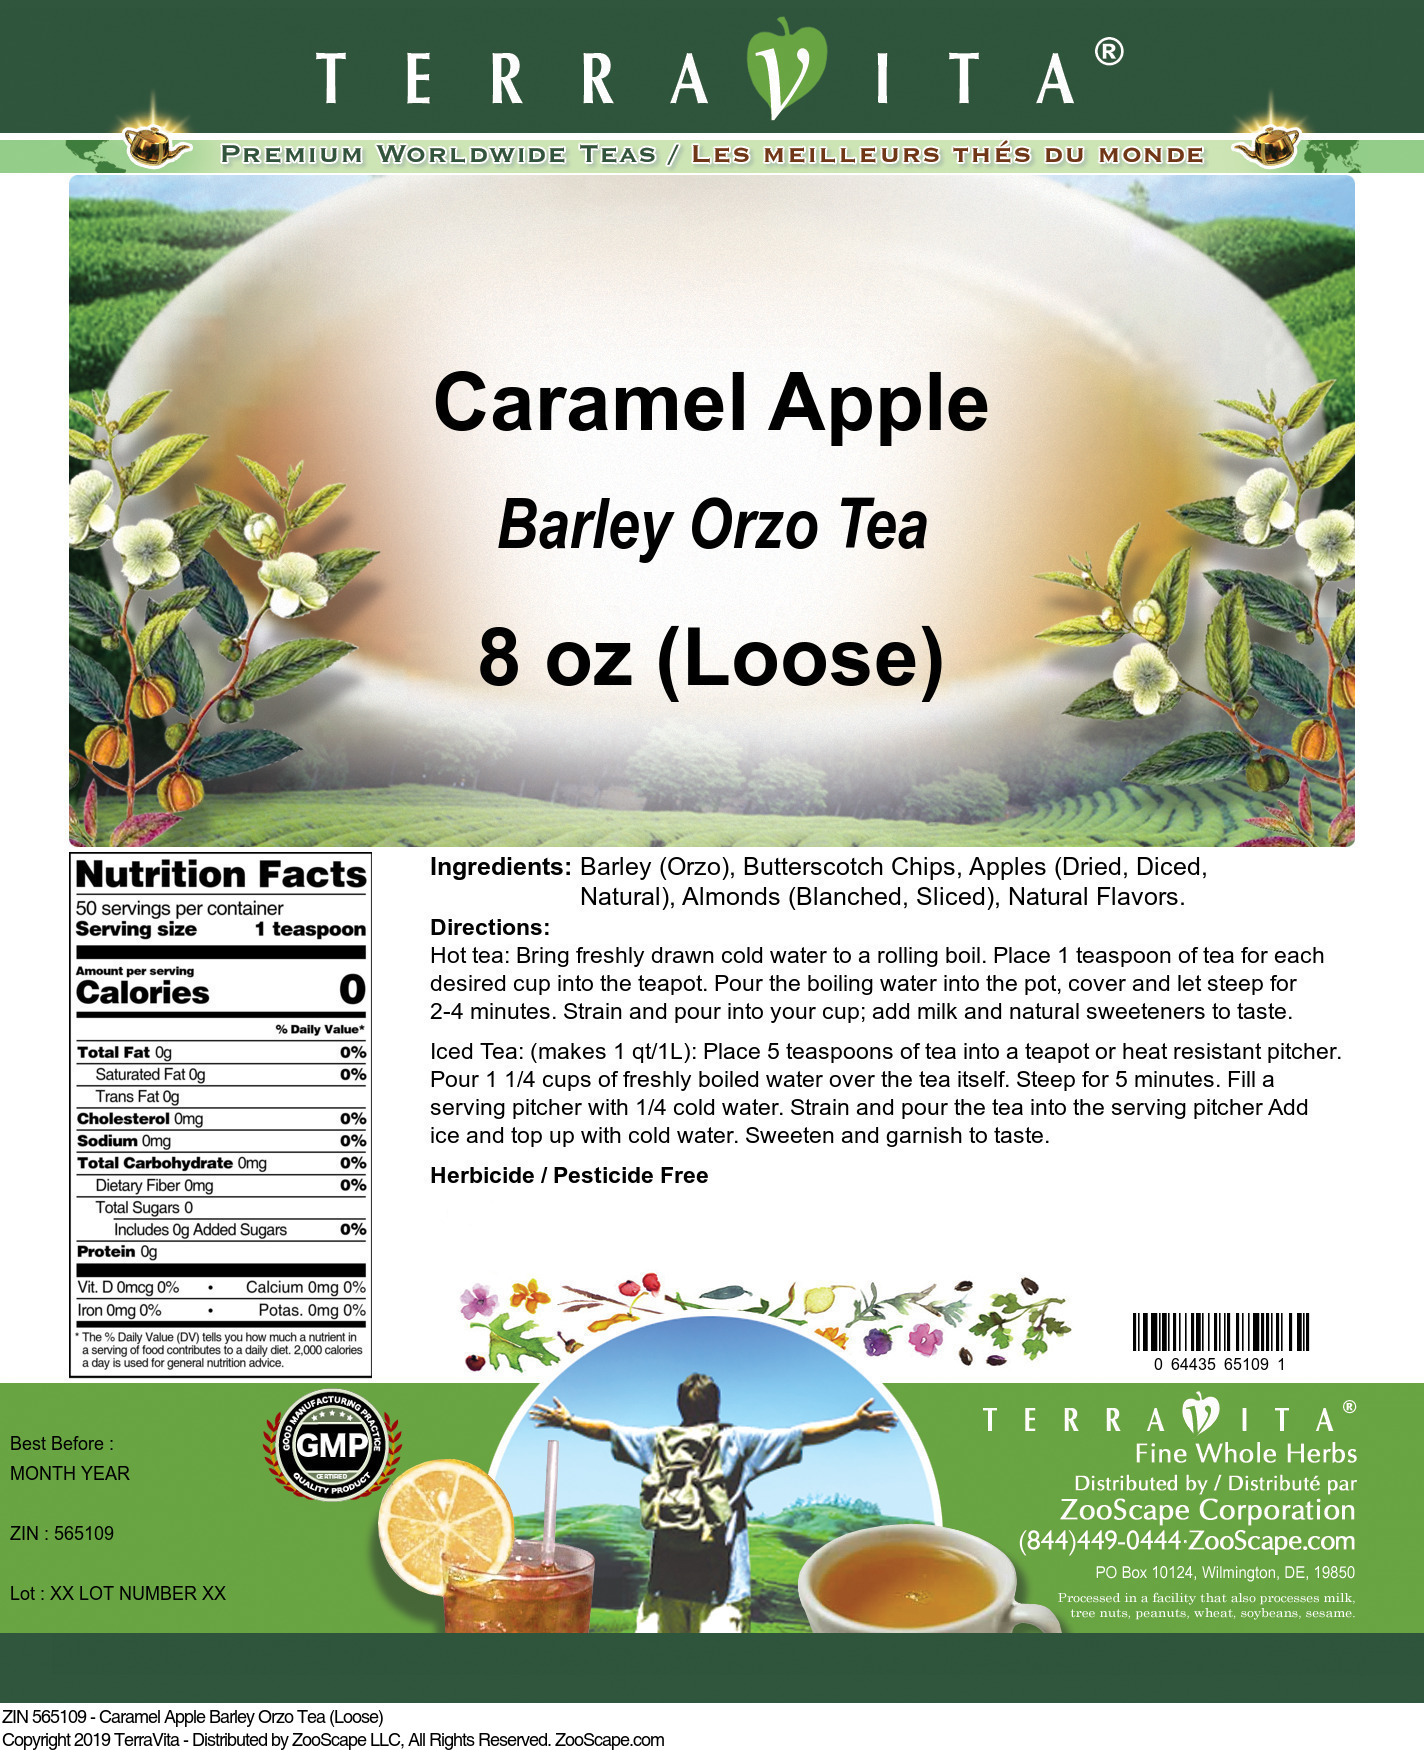 Caramel Apple Barley Orzo Tea (Loose) - Label